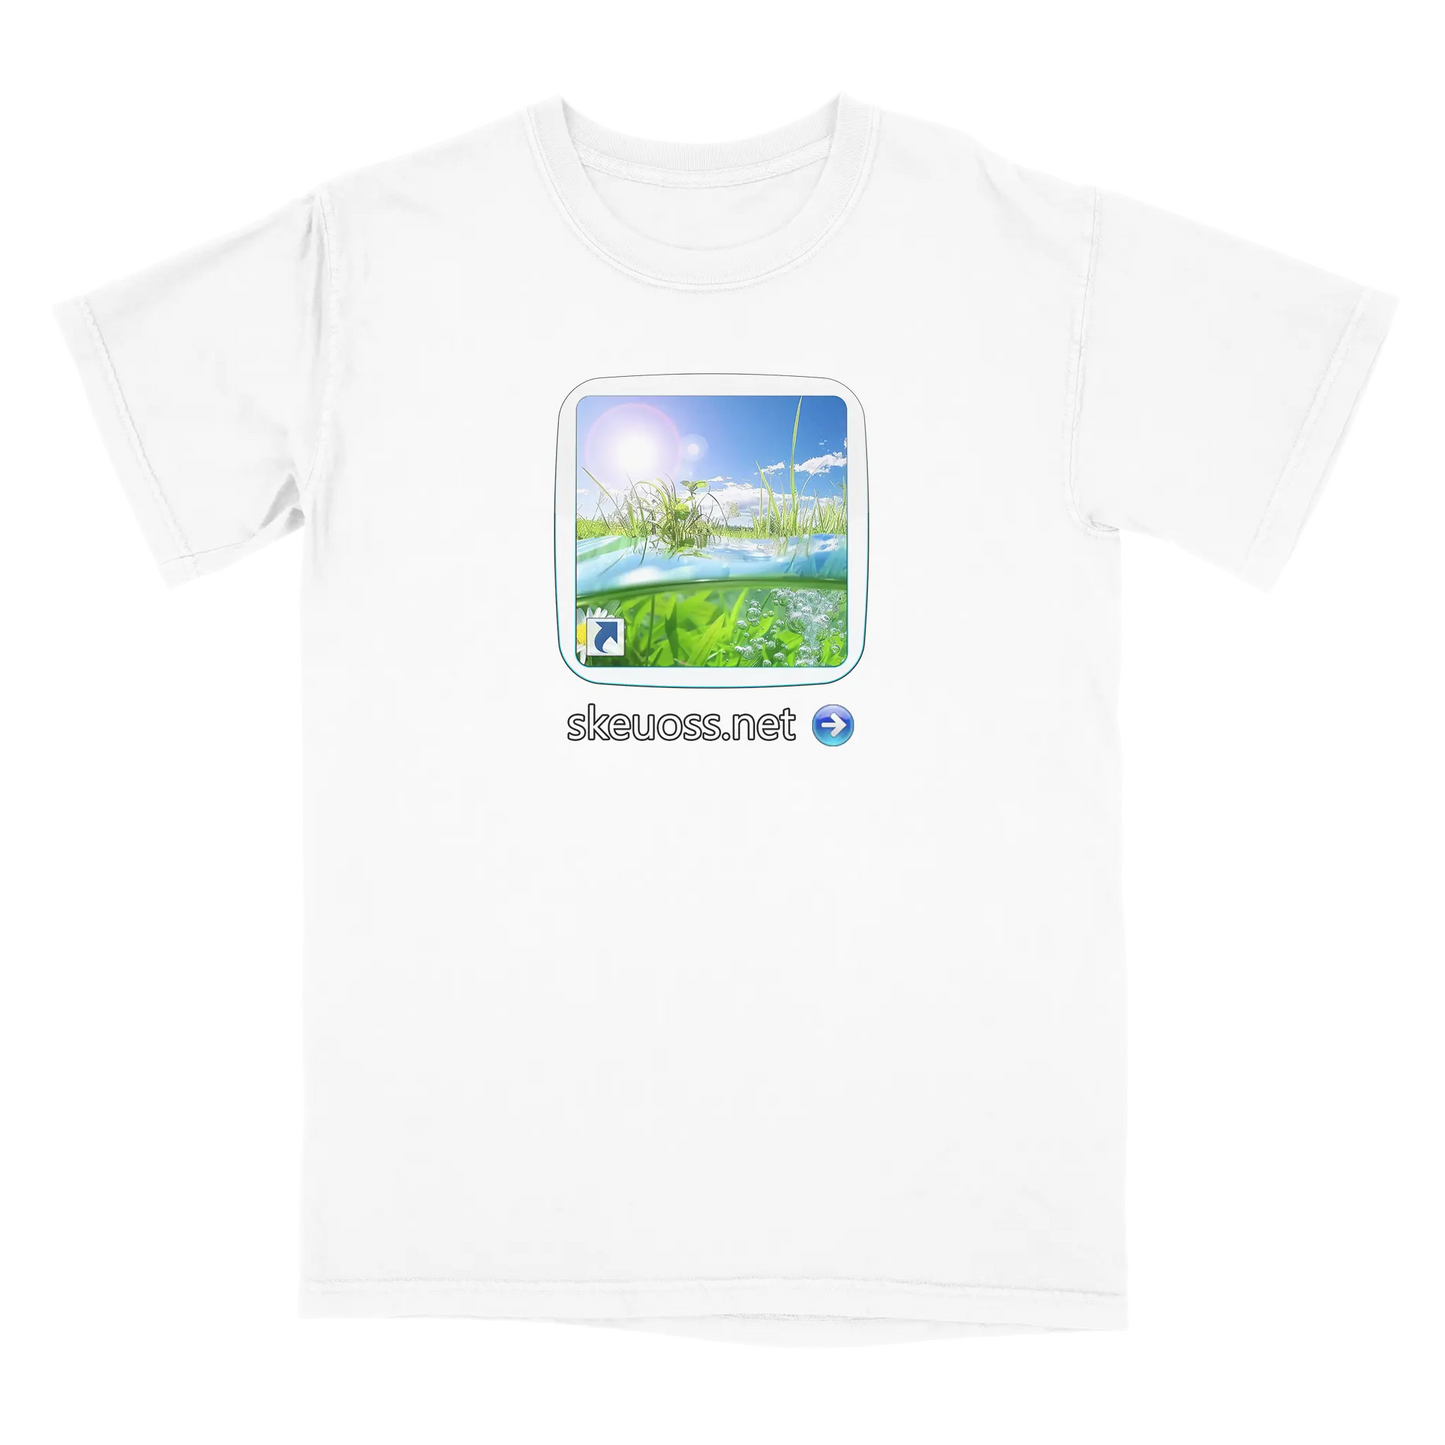 Frutiger Aero T-shirt - User Login Collection - User 208